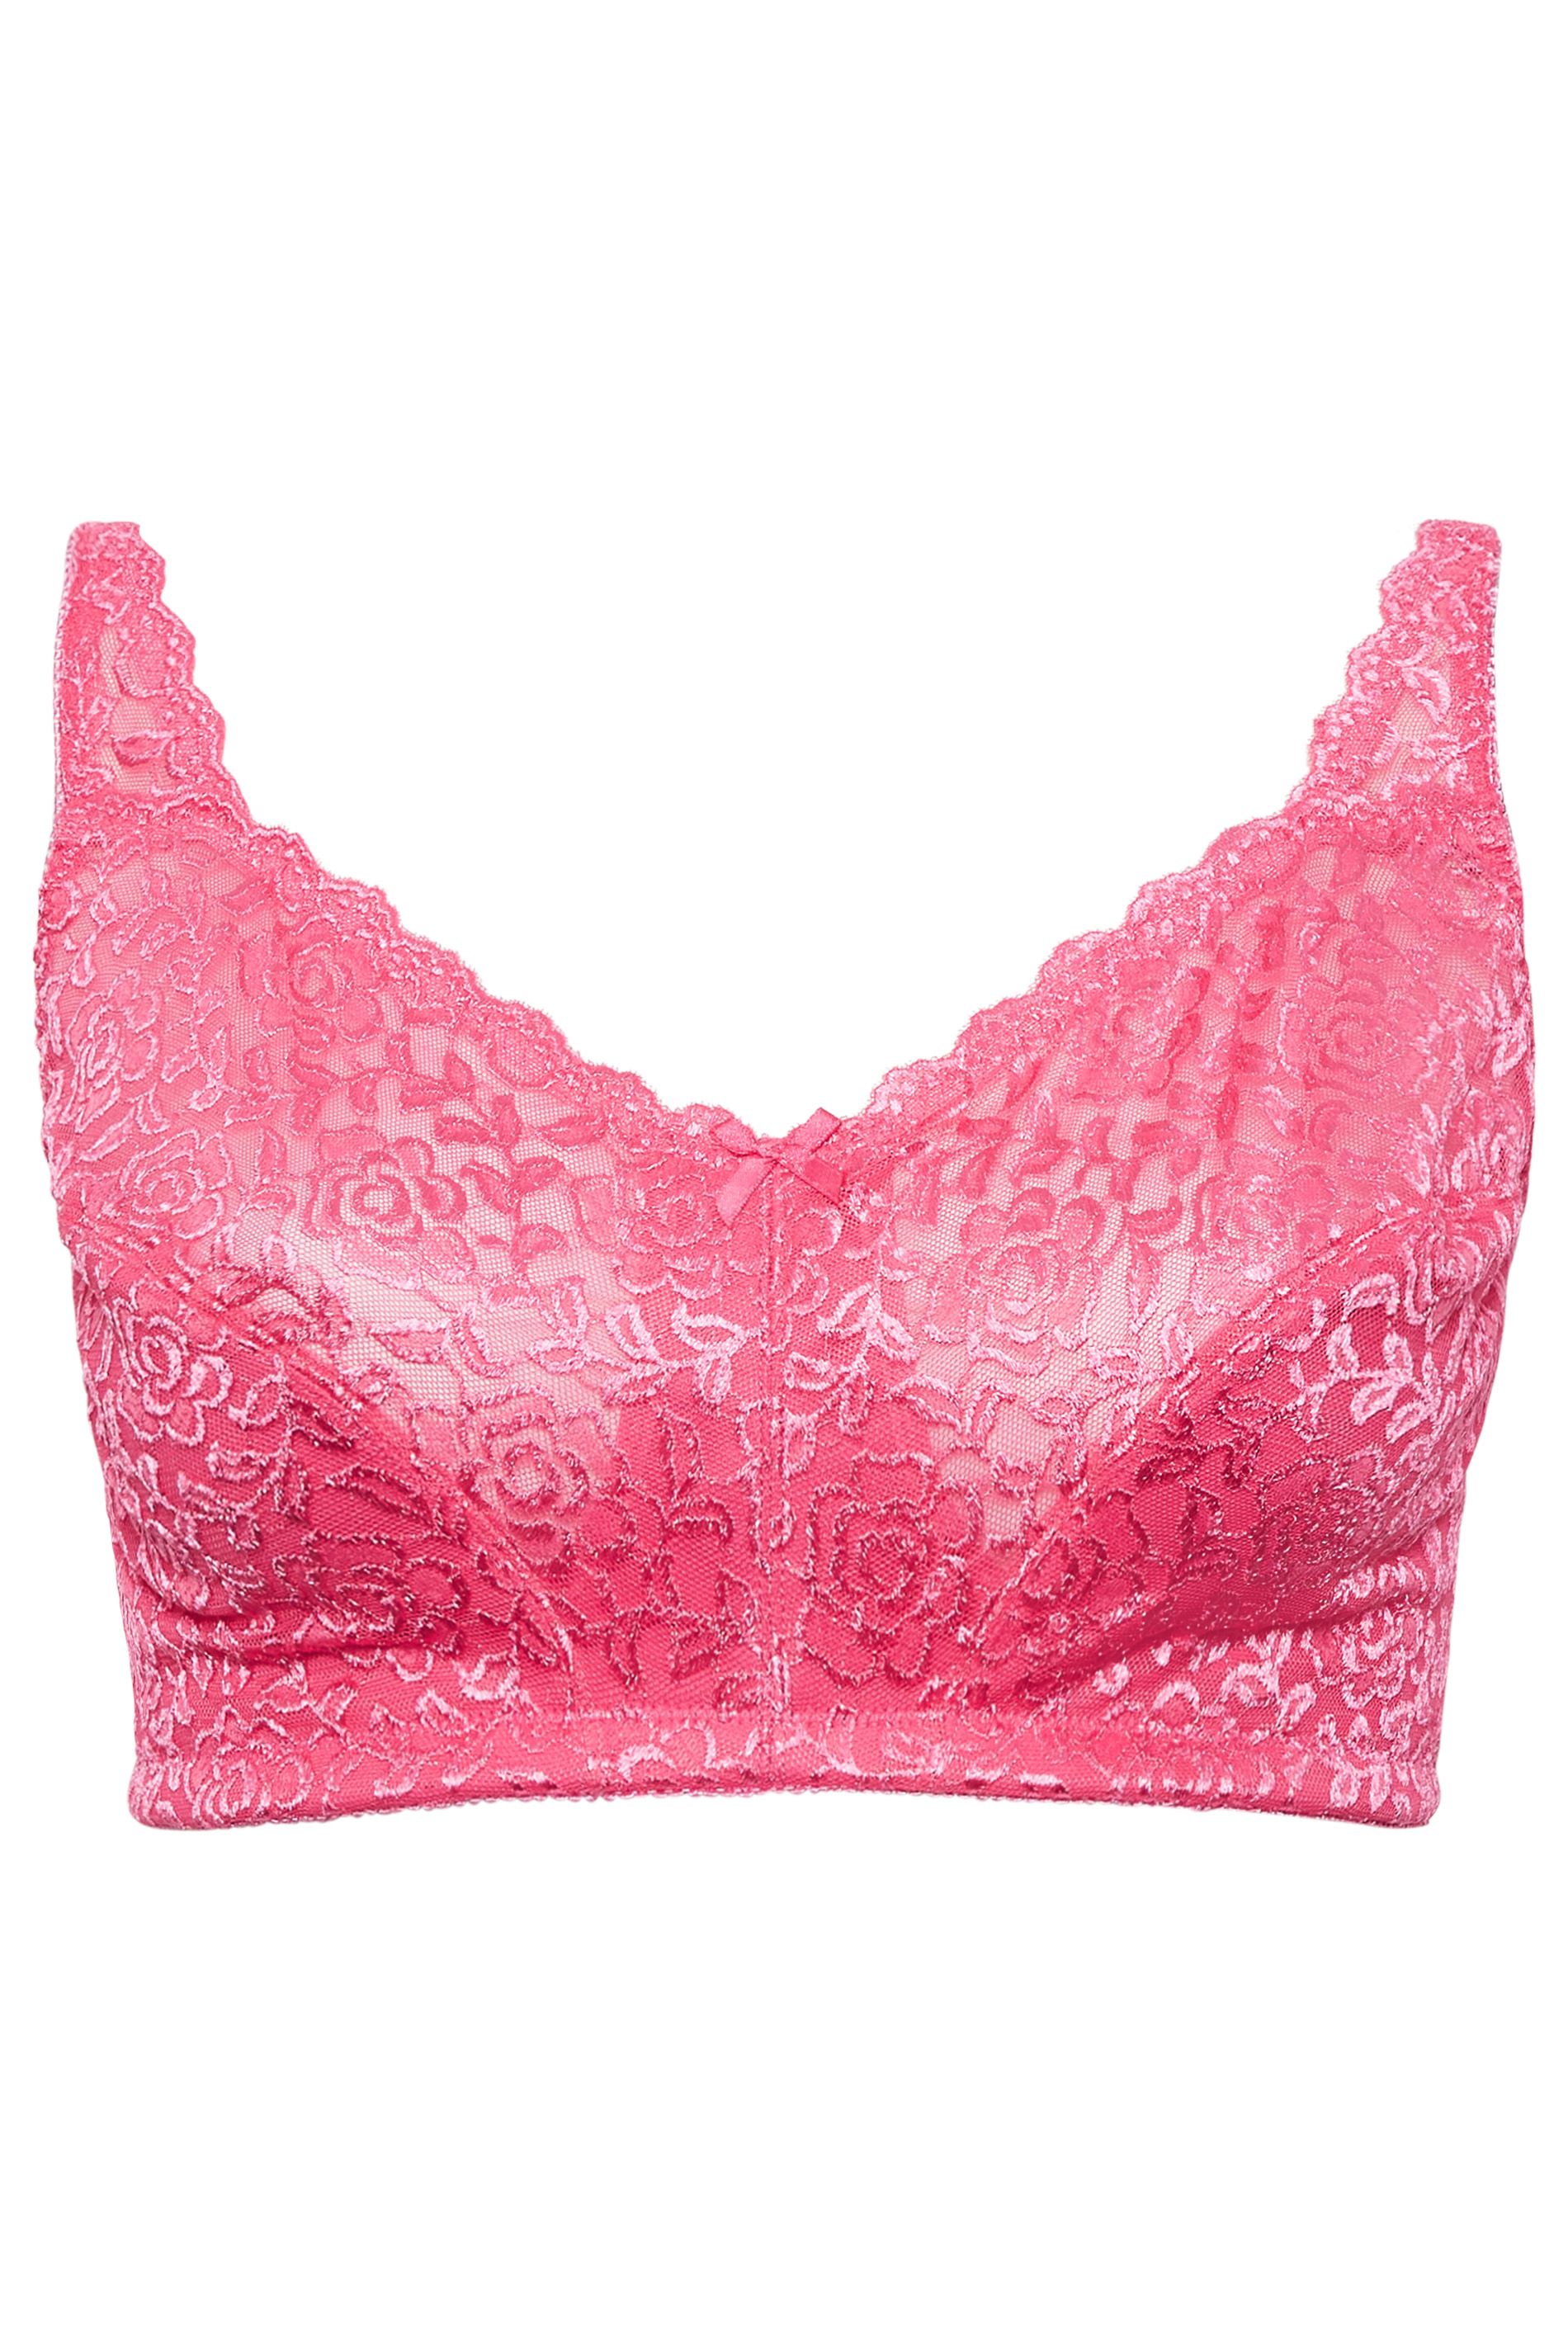 Lace pink non-wired bra - Dim Sublim